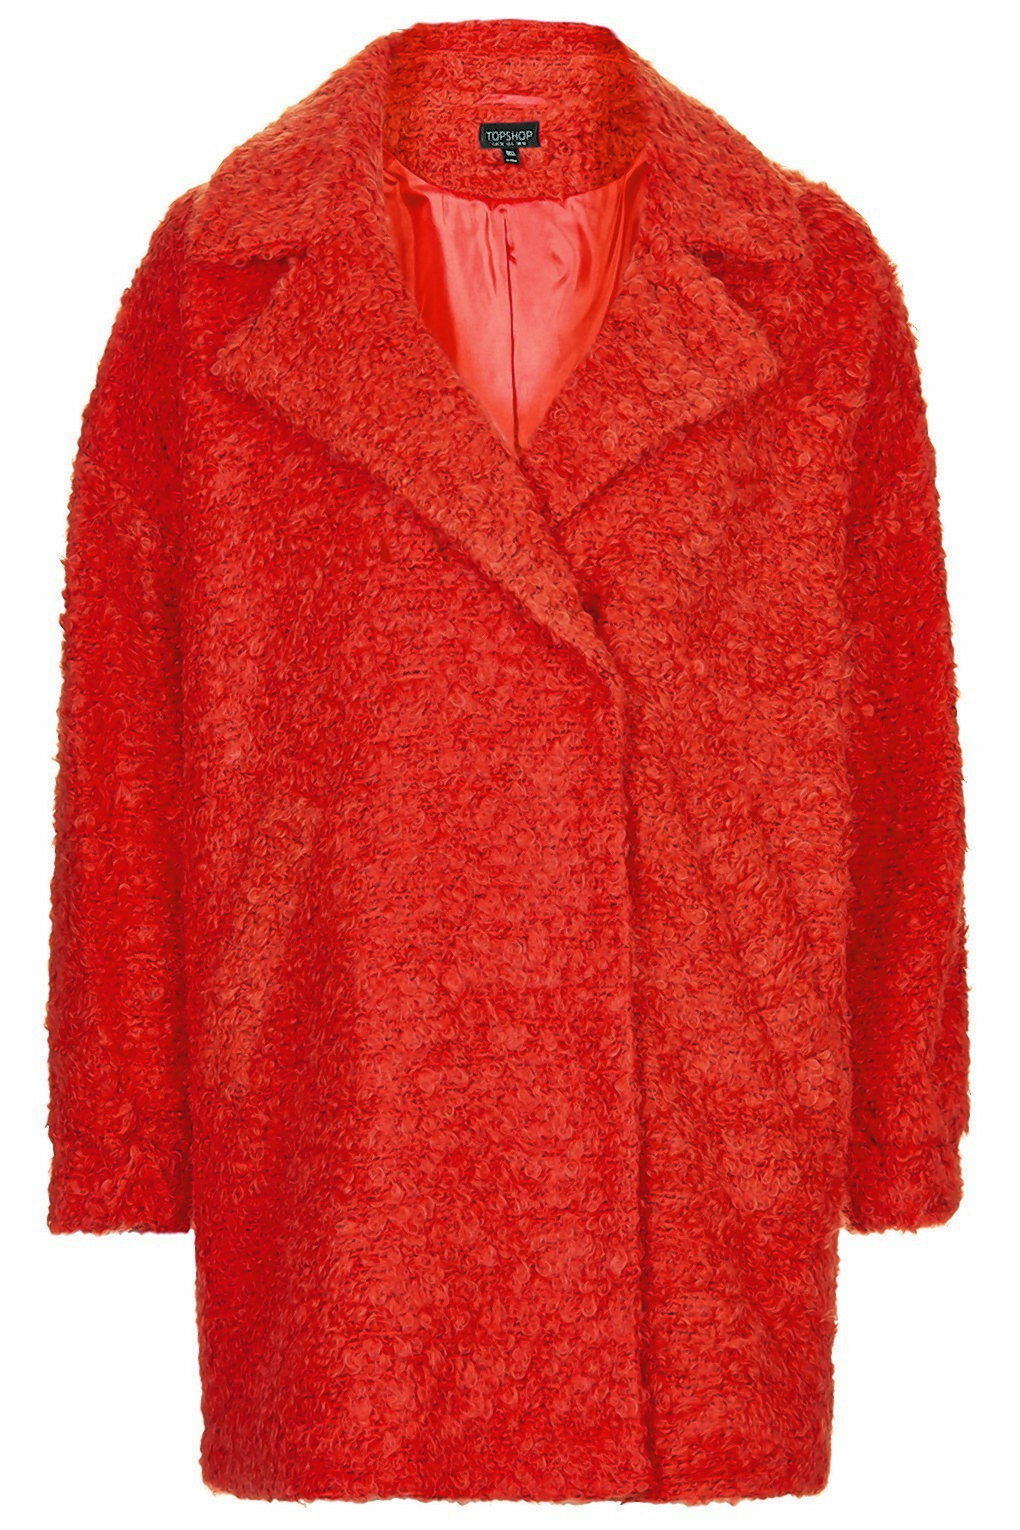 Topshop slouchy wool boyfriend coat, £89